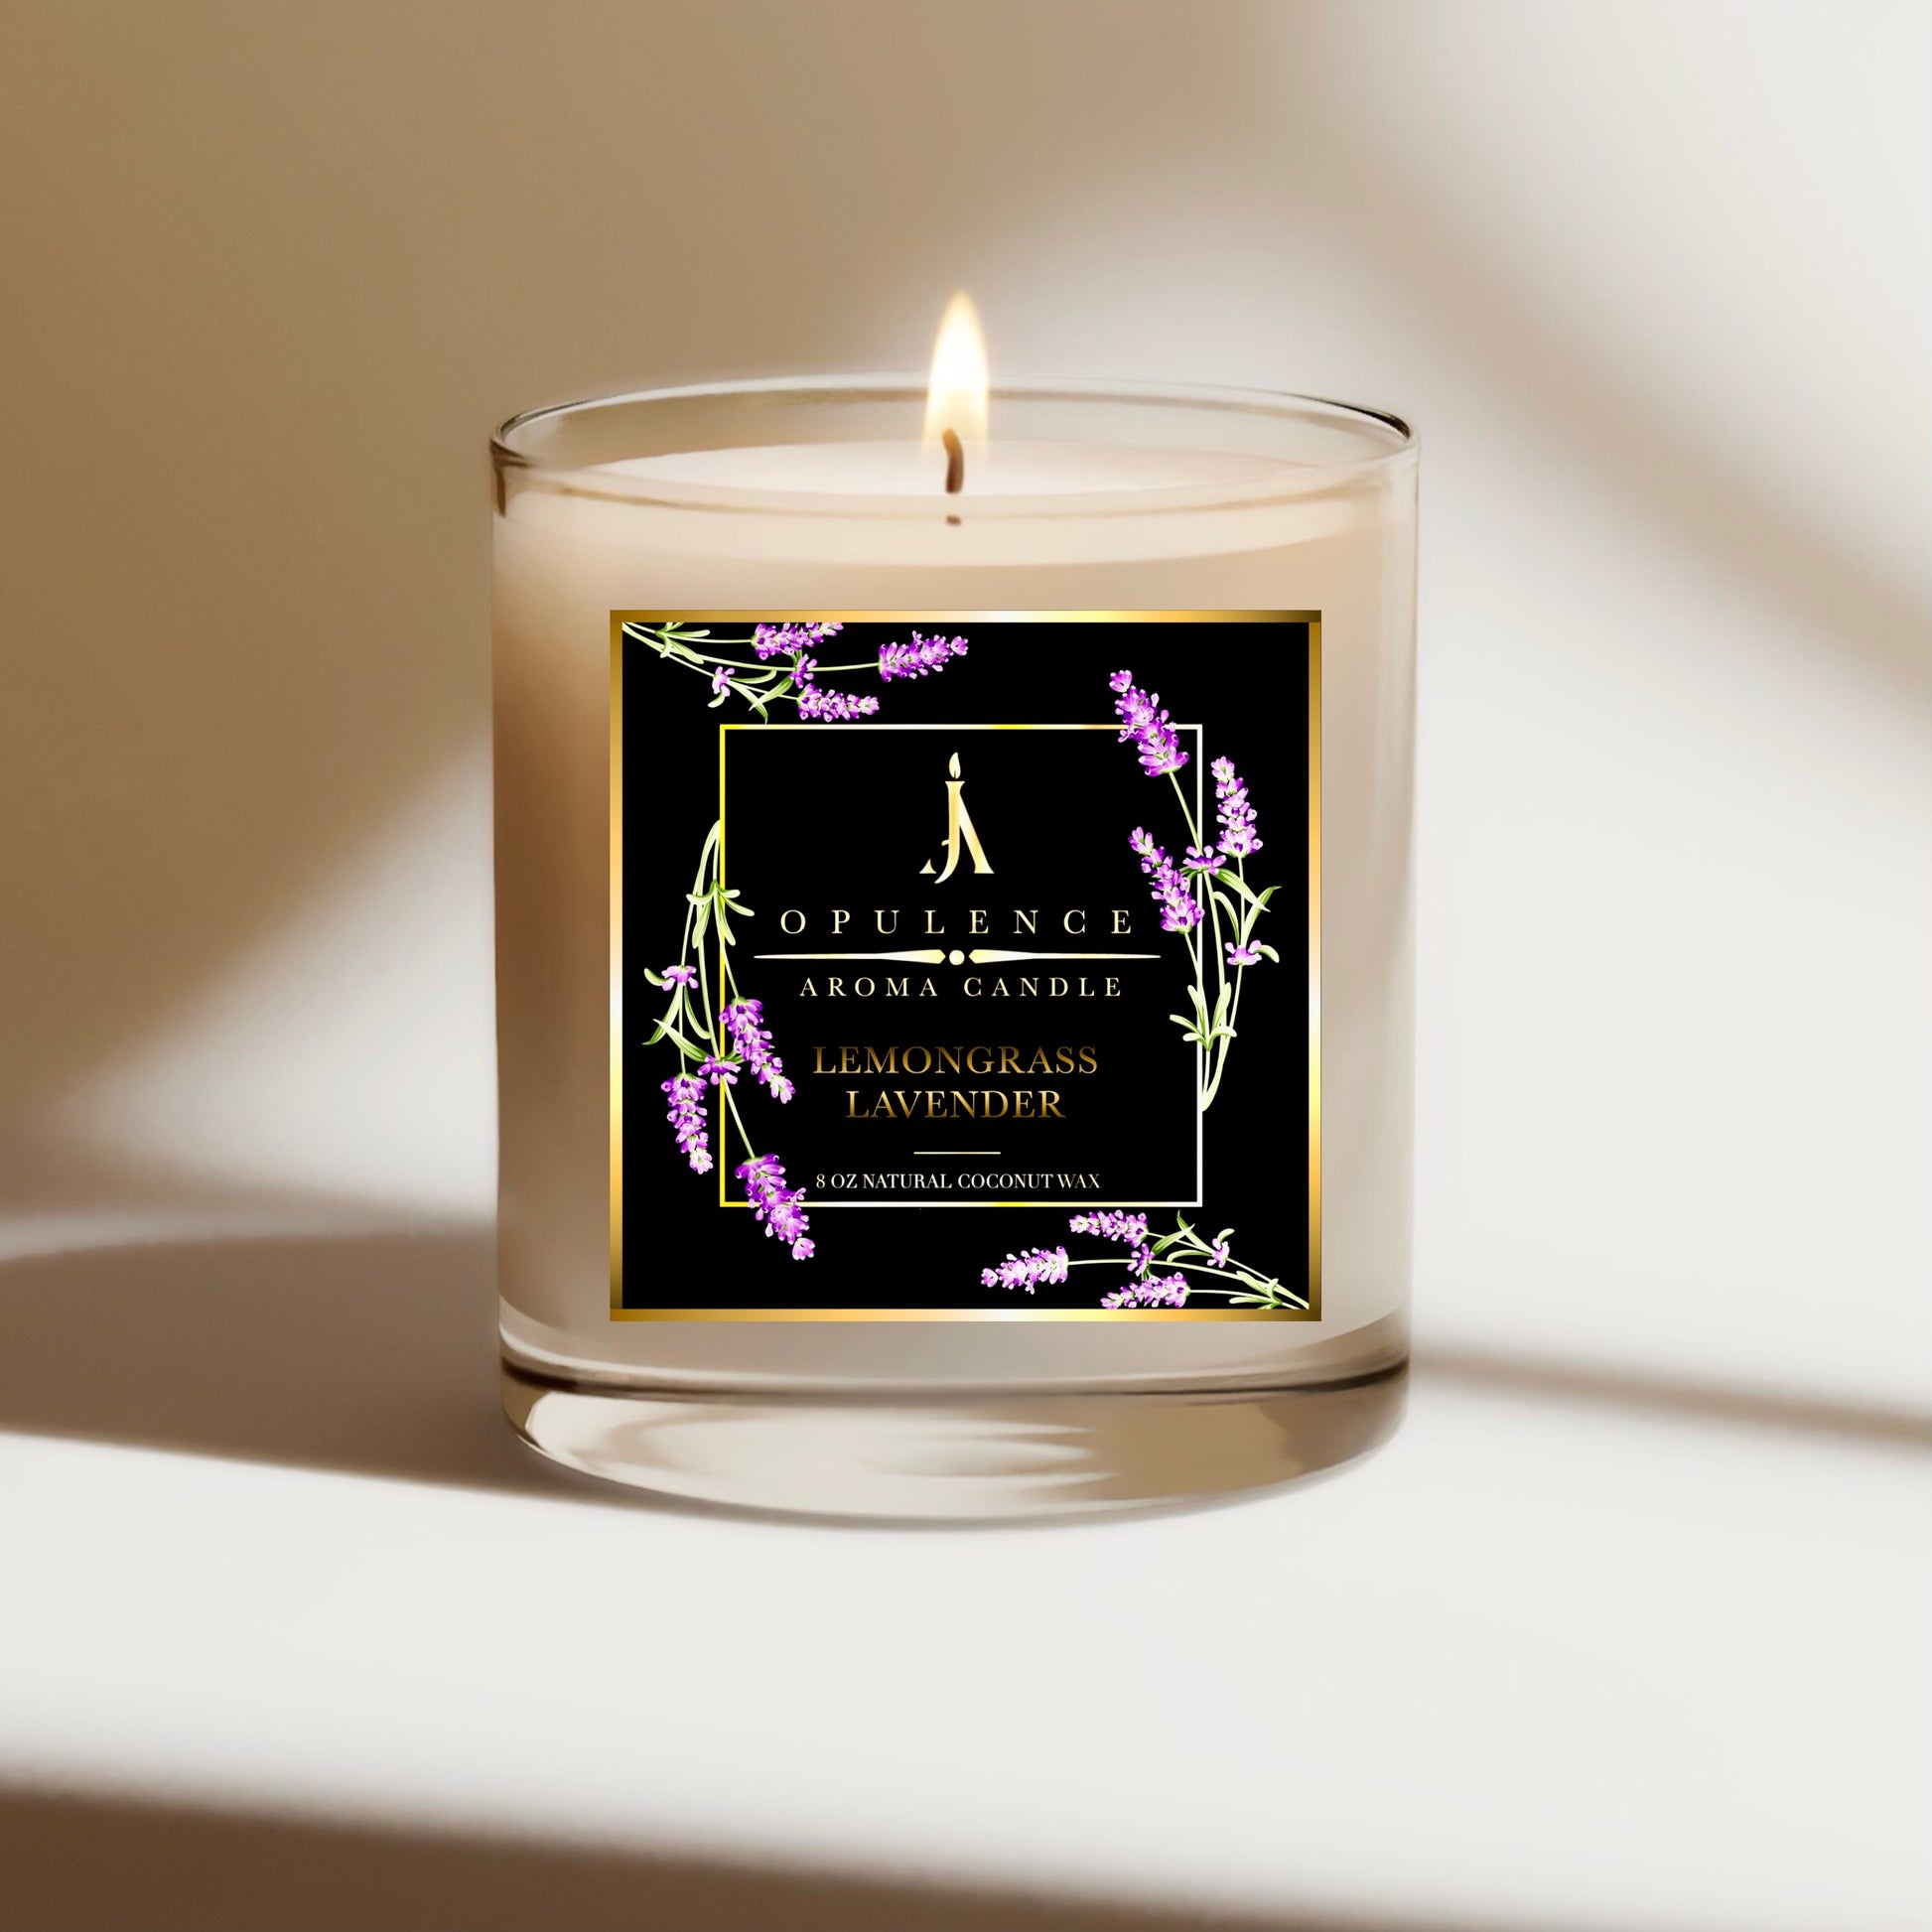 Lemongrass lavender candle